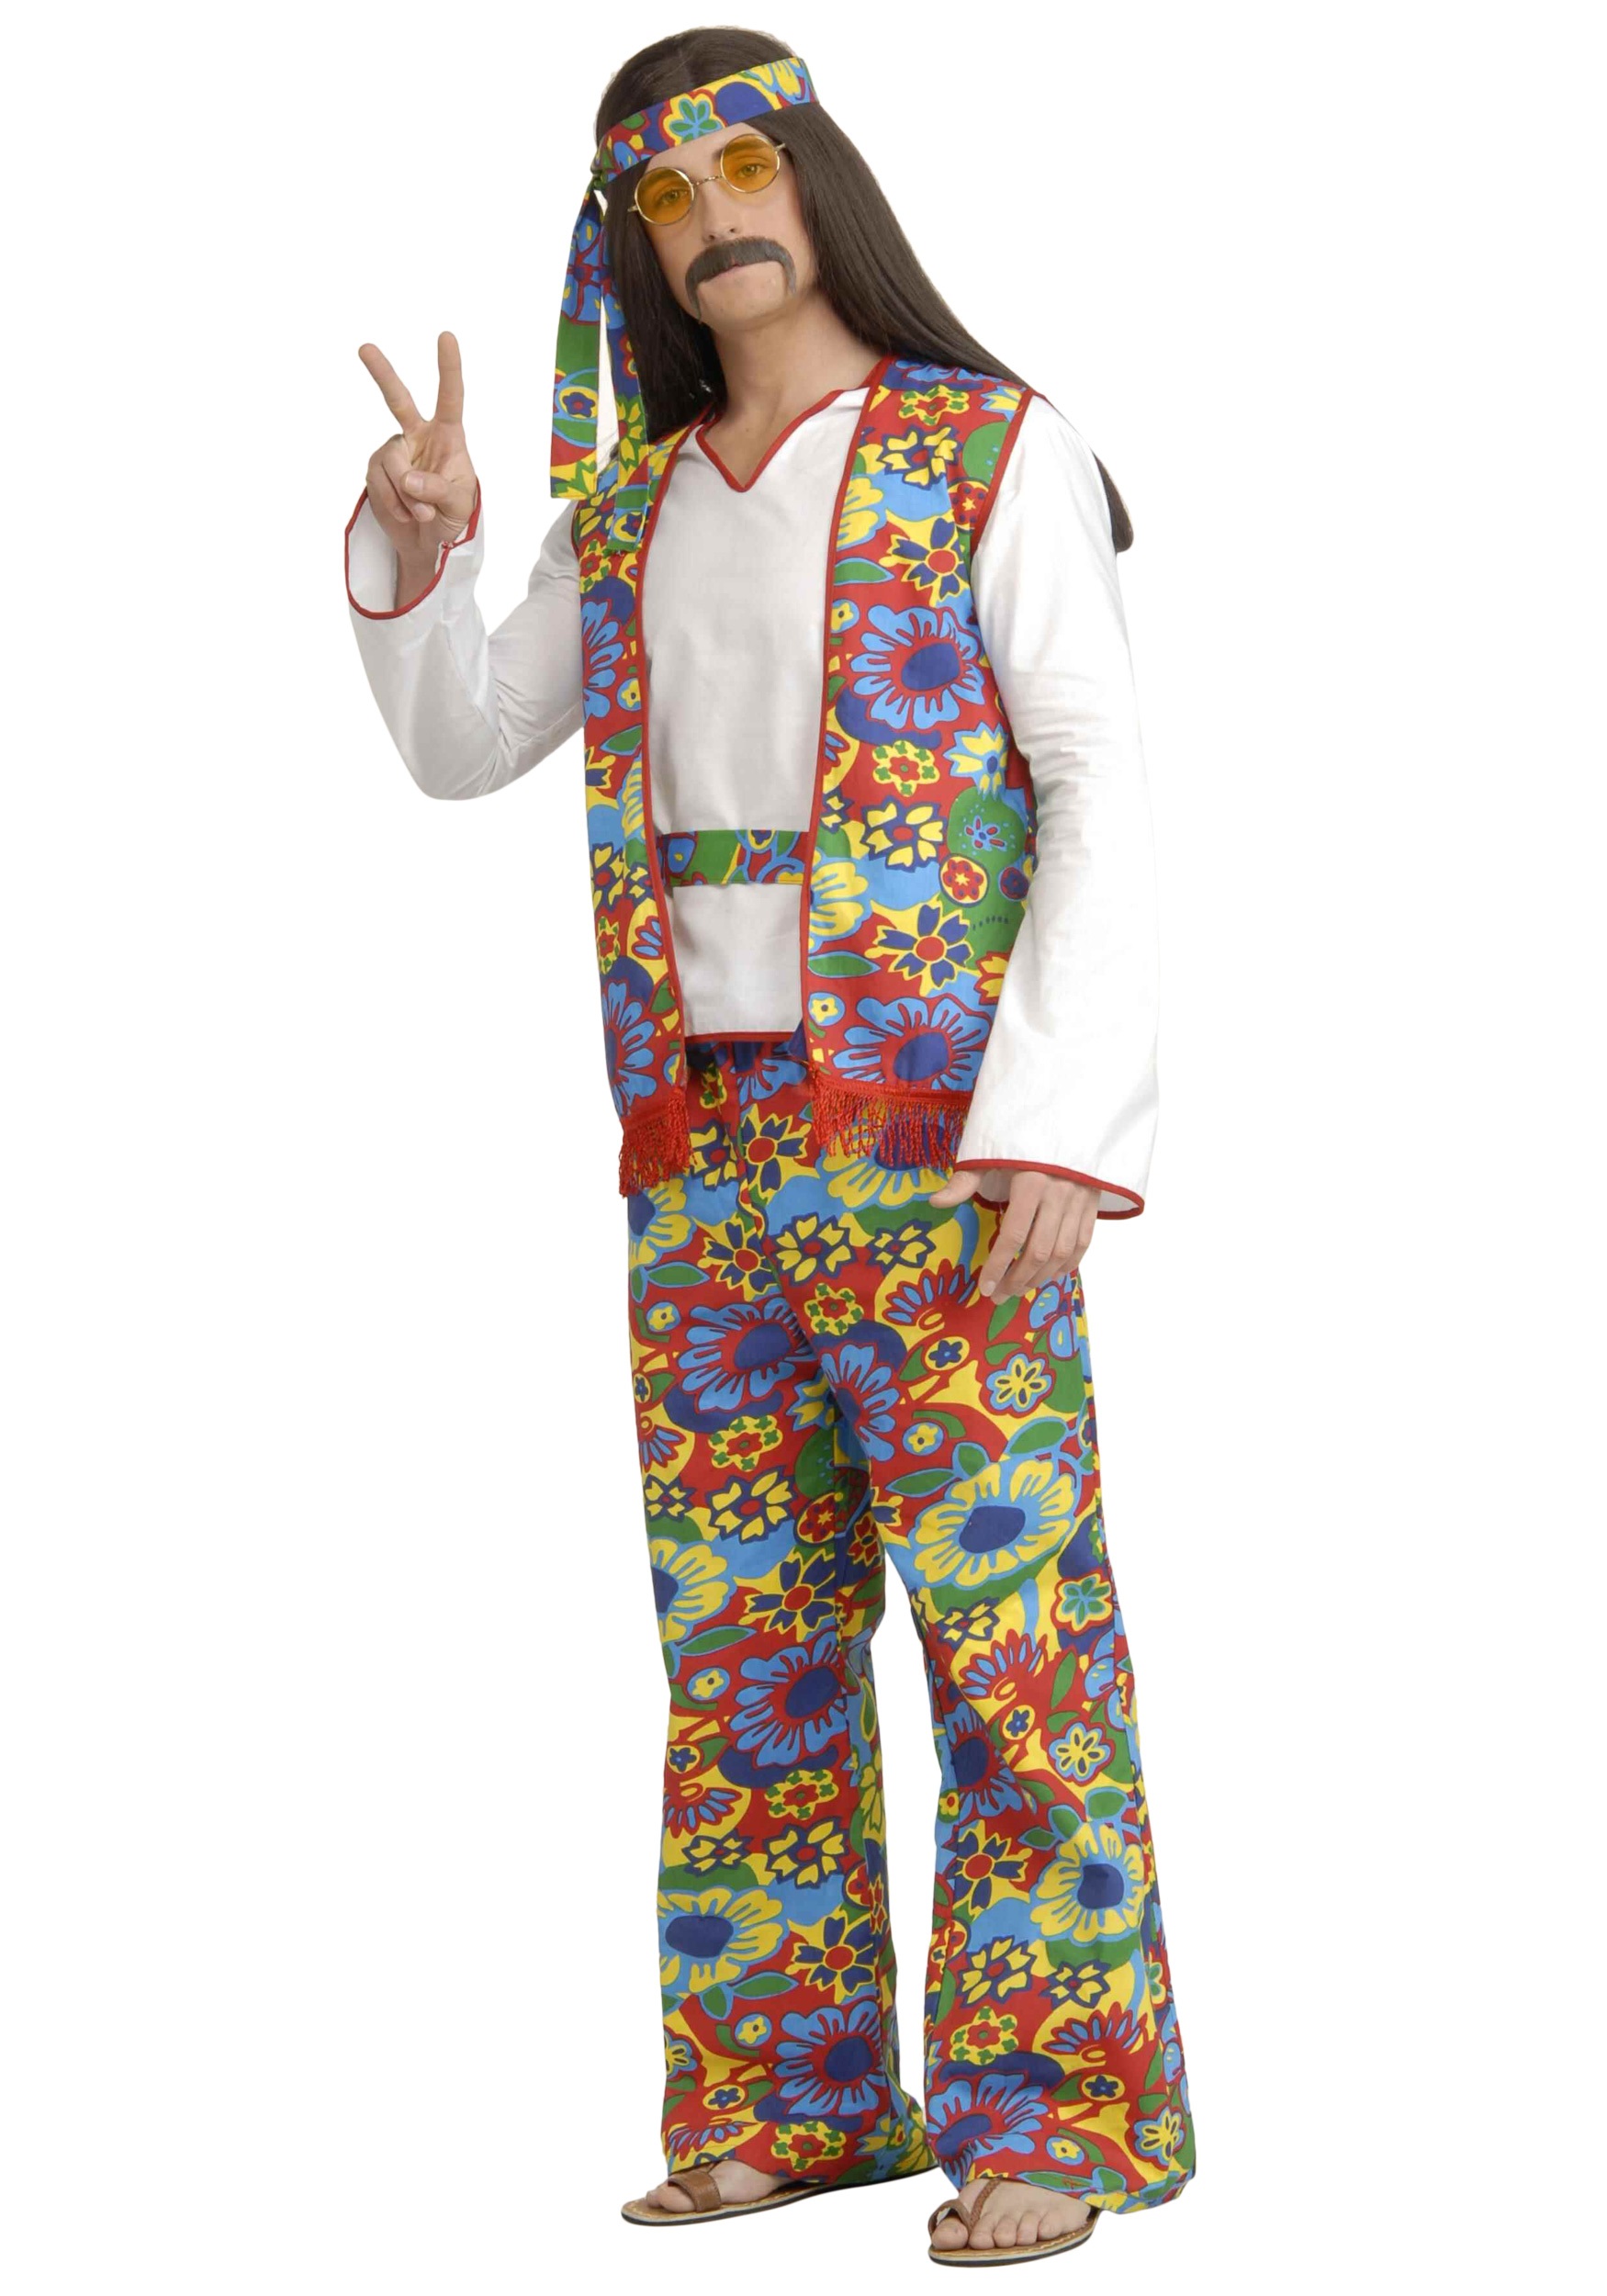 Adults Rainbow Hippy Costume